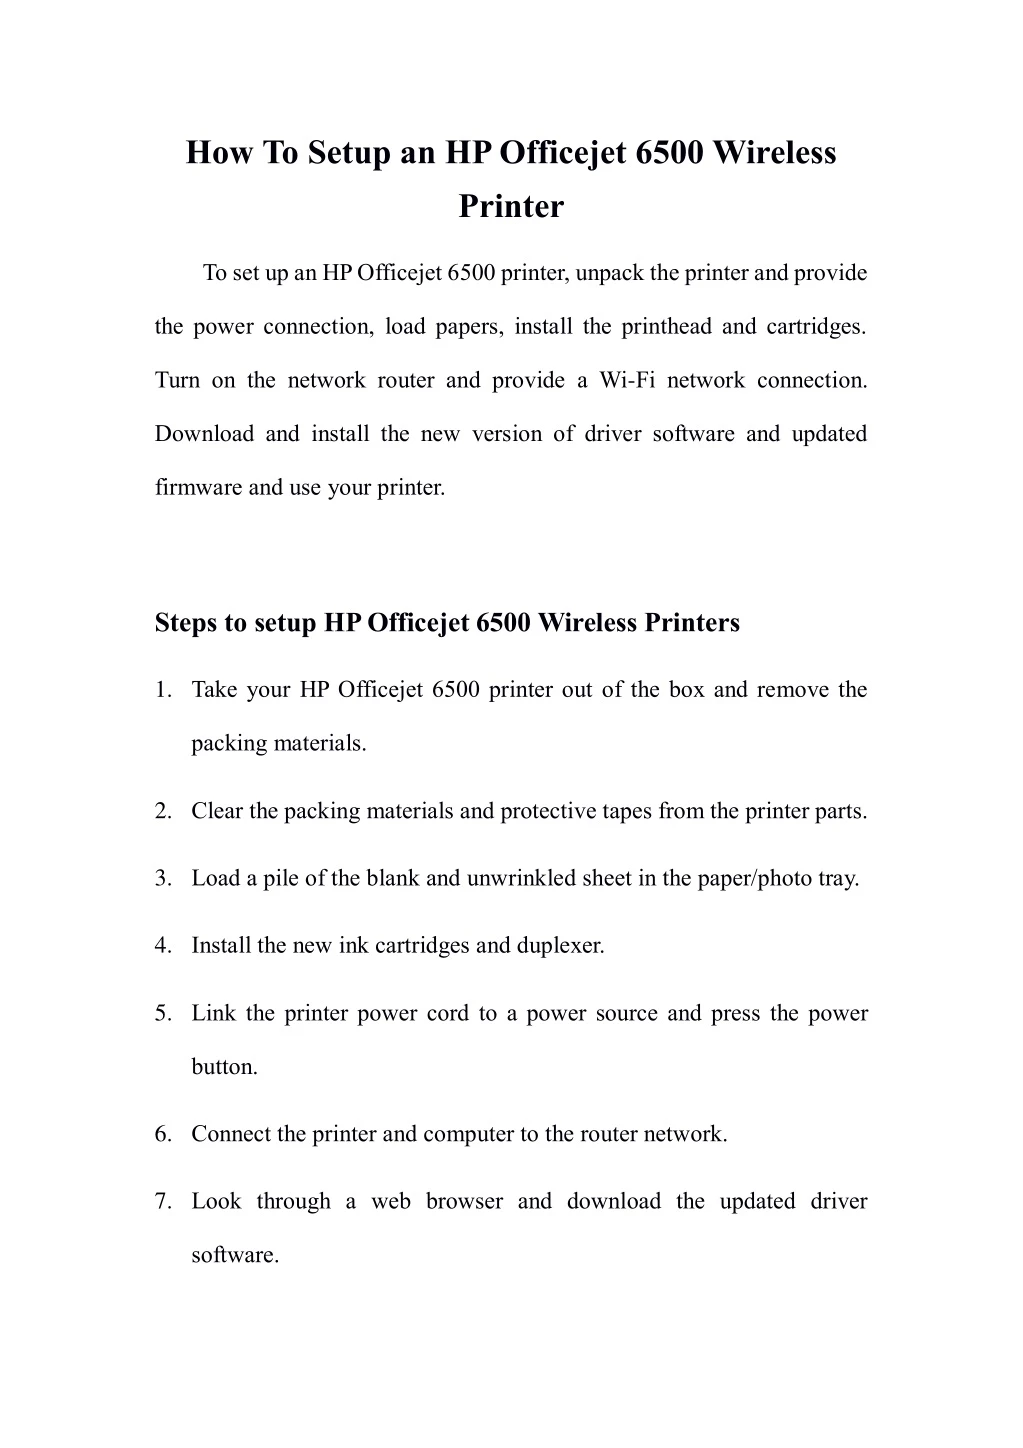 how to setup an hp officejet 6500 wireless printer